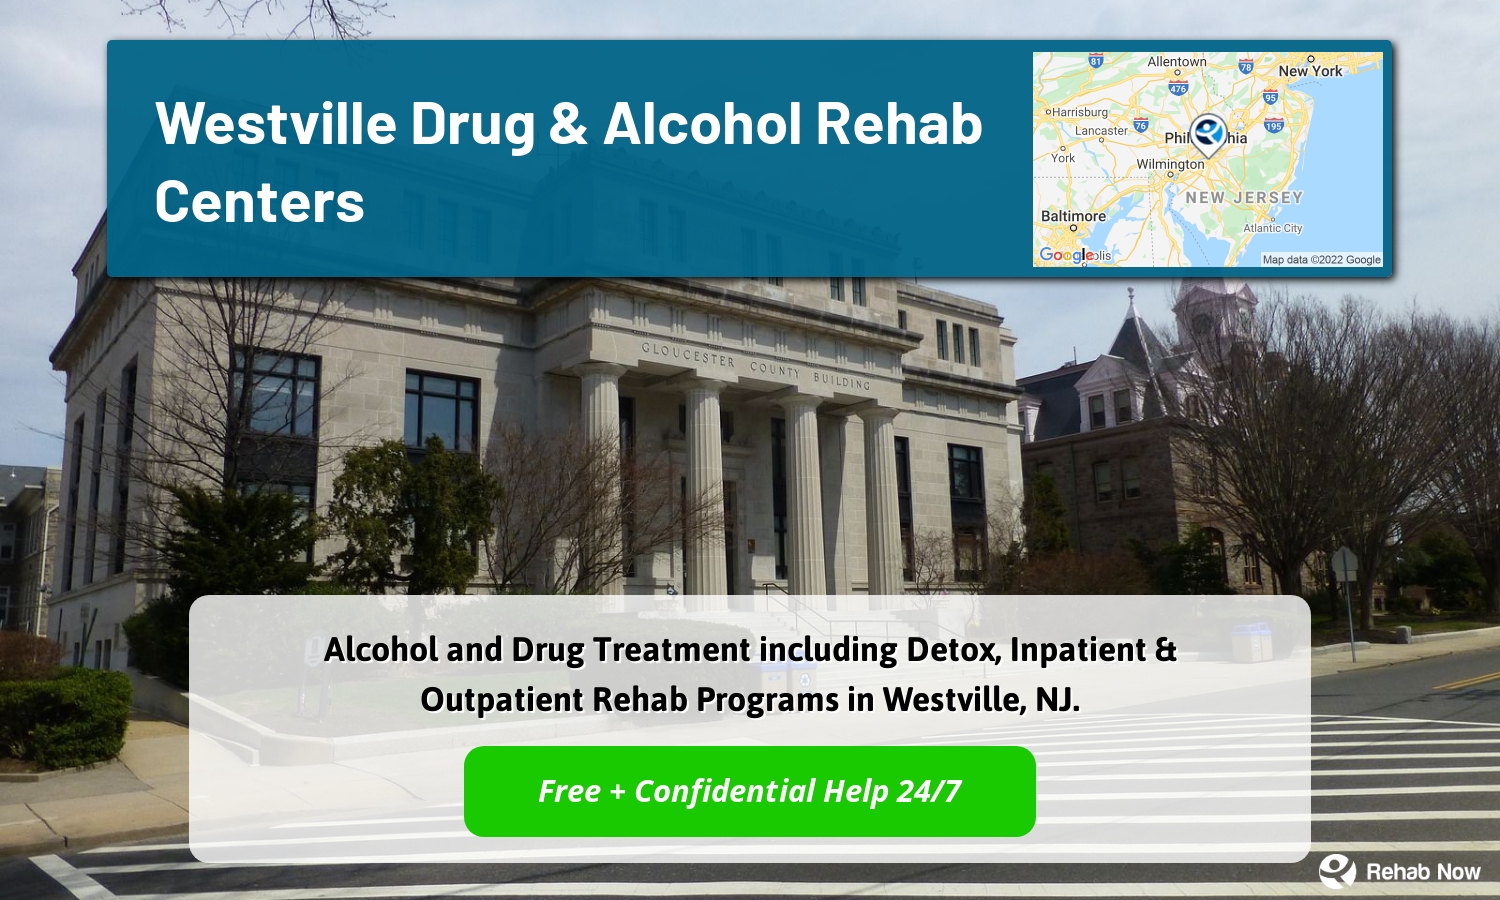 Alcohol and Drug Treatment including Detox, Inpatient & Outpatient Rehab Programs in Westville, NJ.